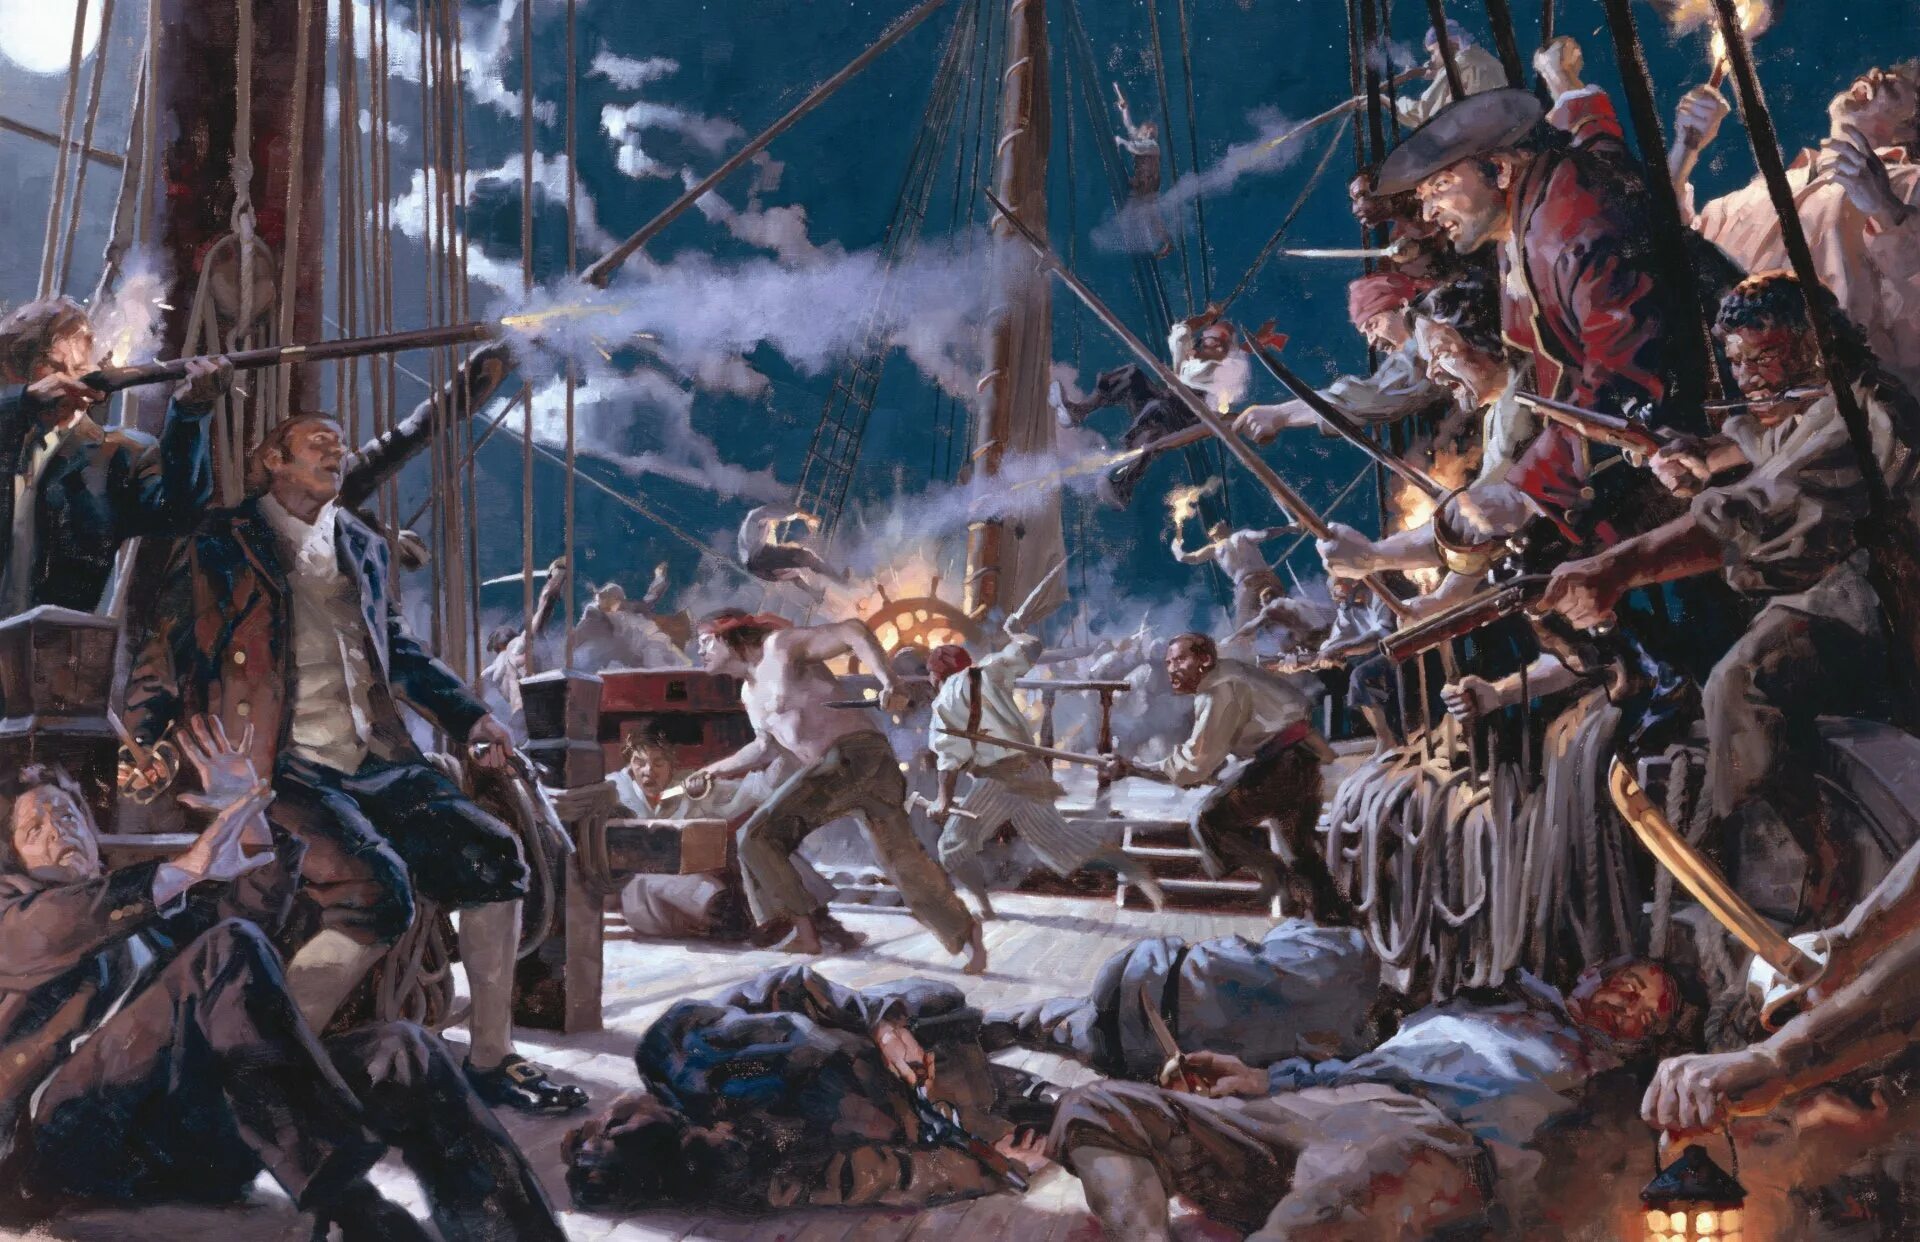 Нападение на судно. Карстен роде пират Ивана Грозного. Каперская флотилия Ивана Грозного. Грегори Манчесс пираты. Пираты абордаж арт.